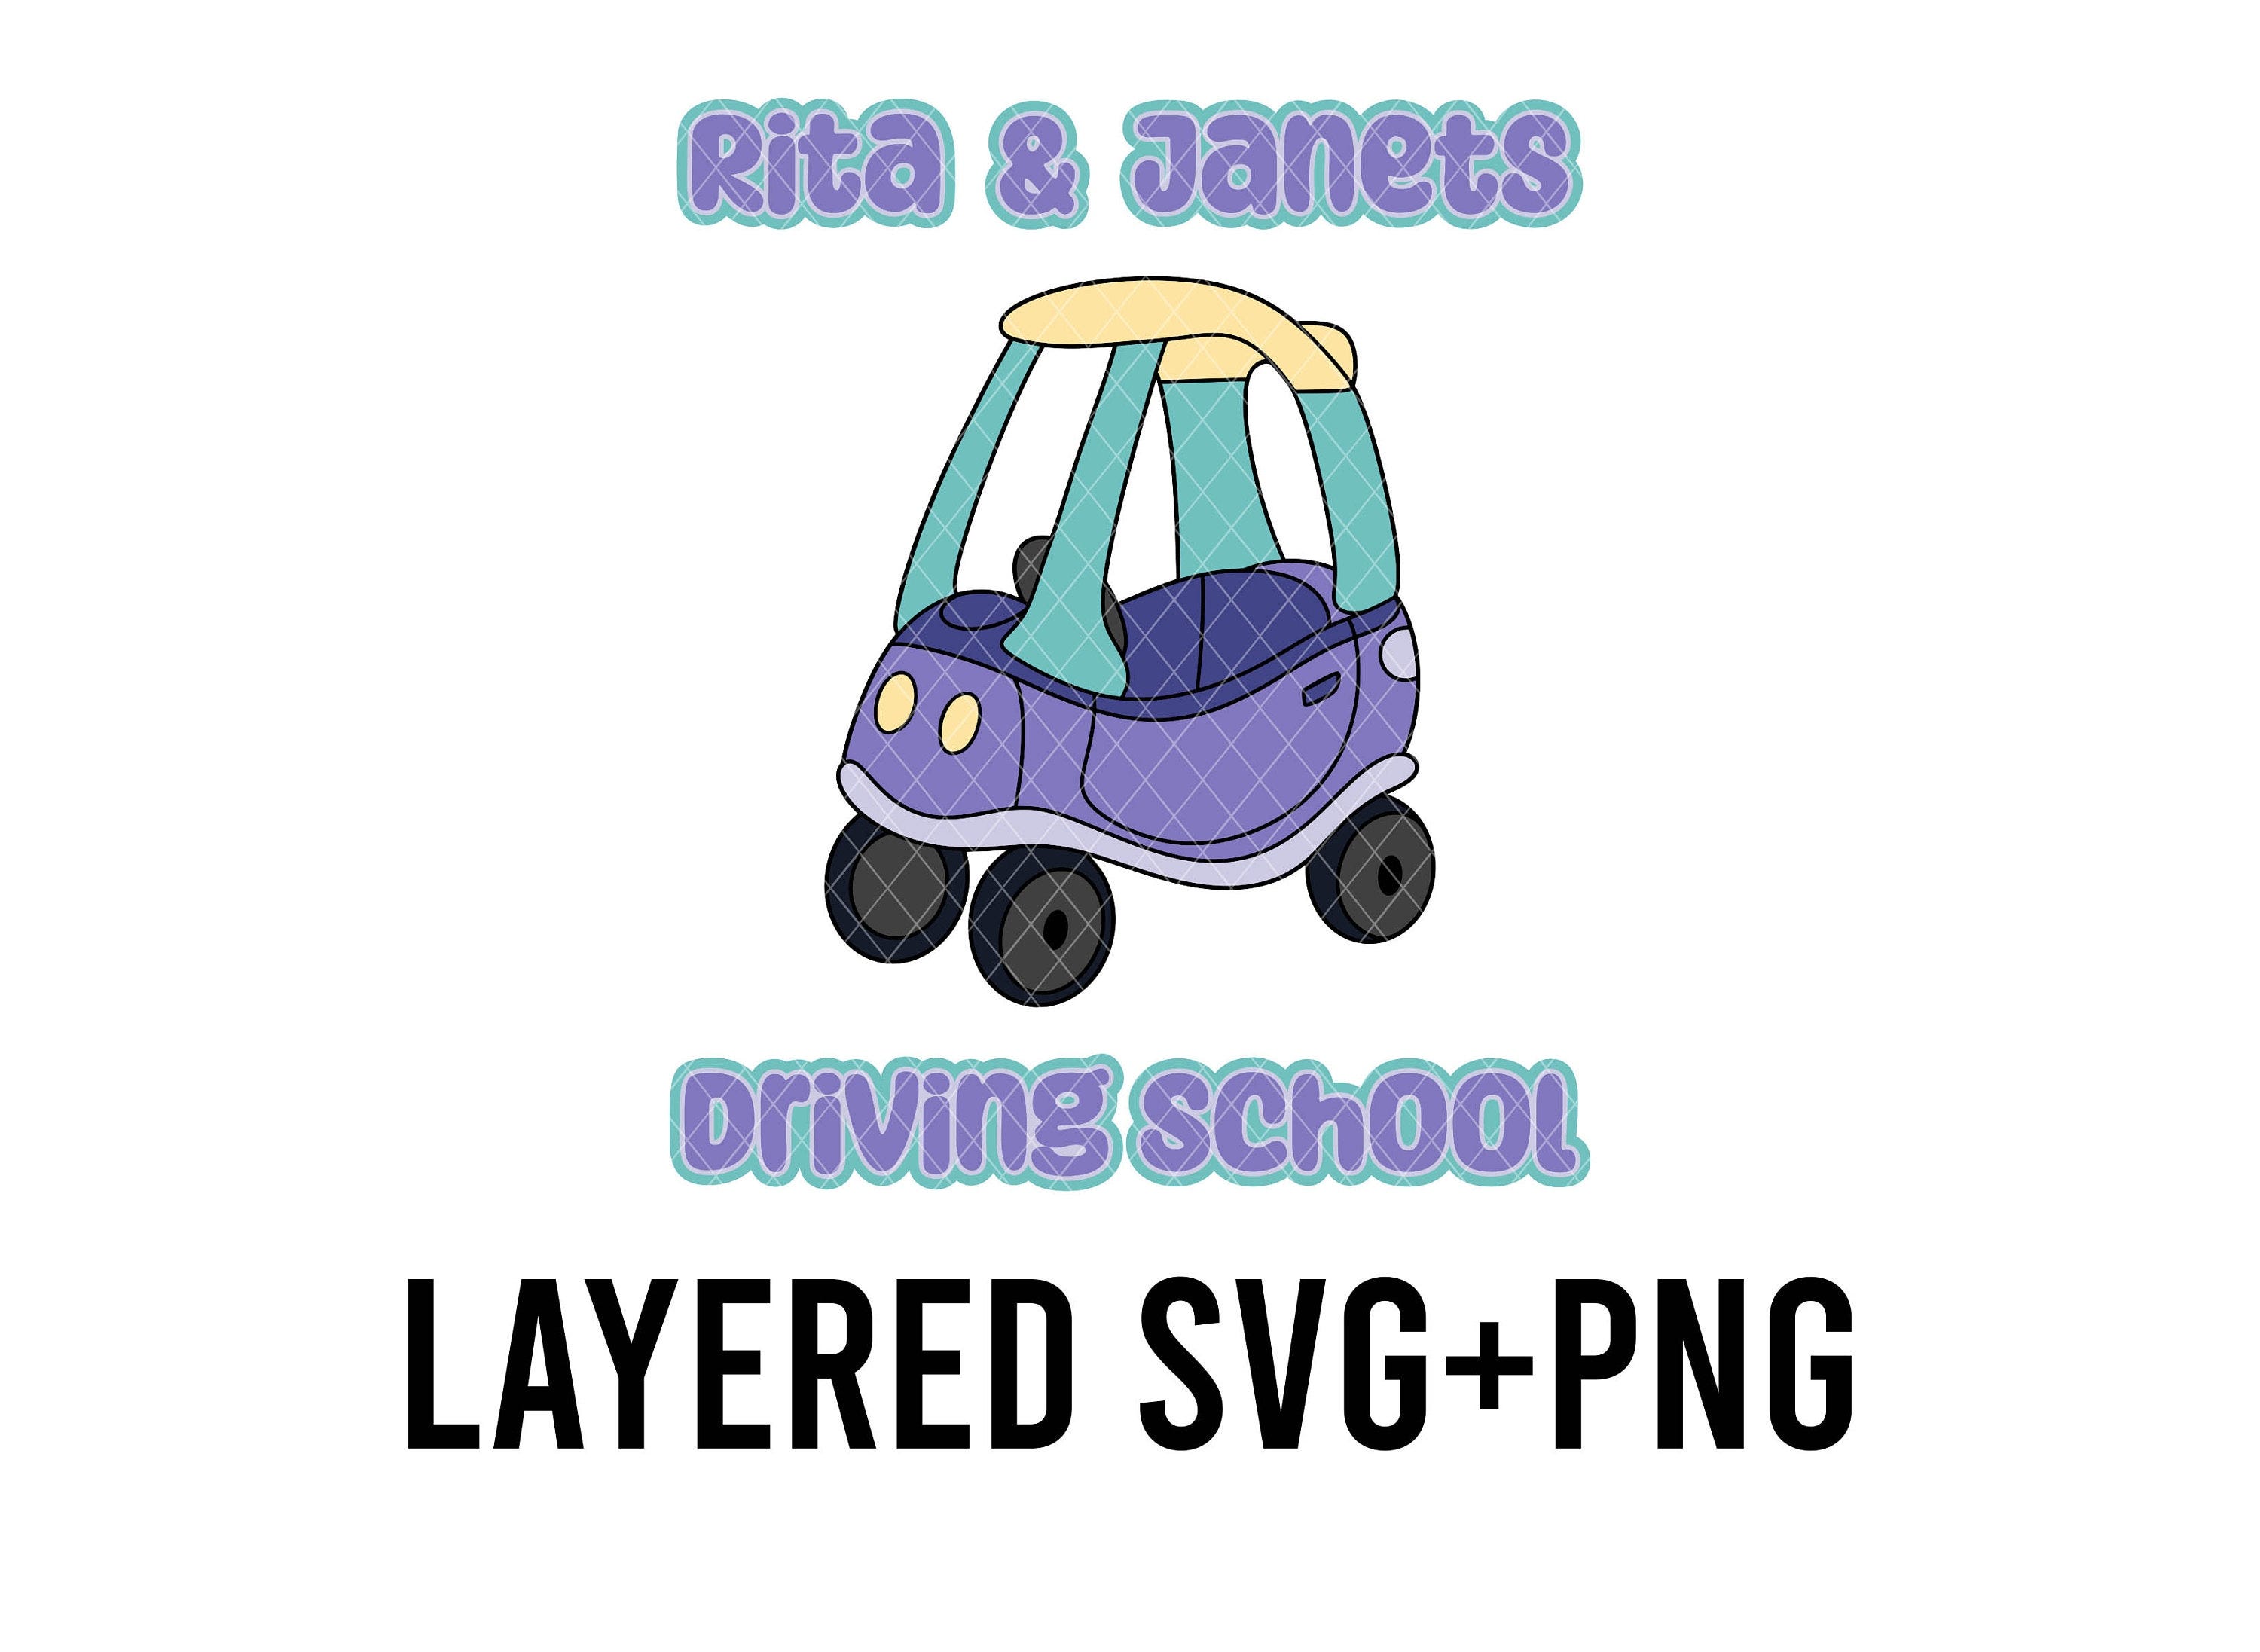 Rita & Janet Blue Dog Layered SVG + PNG